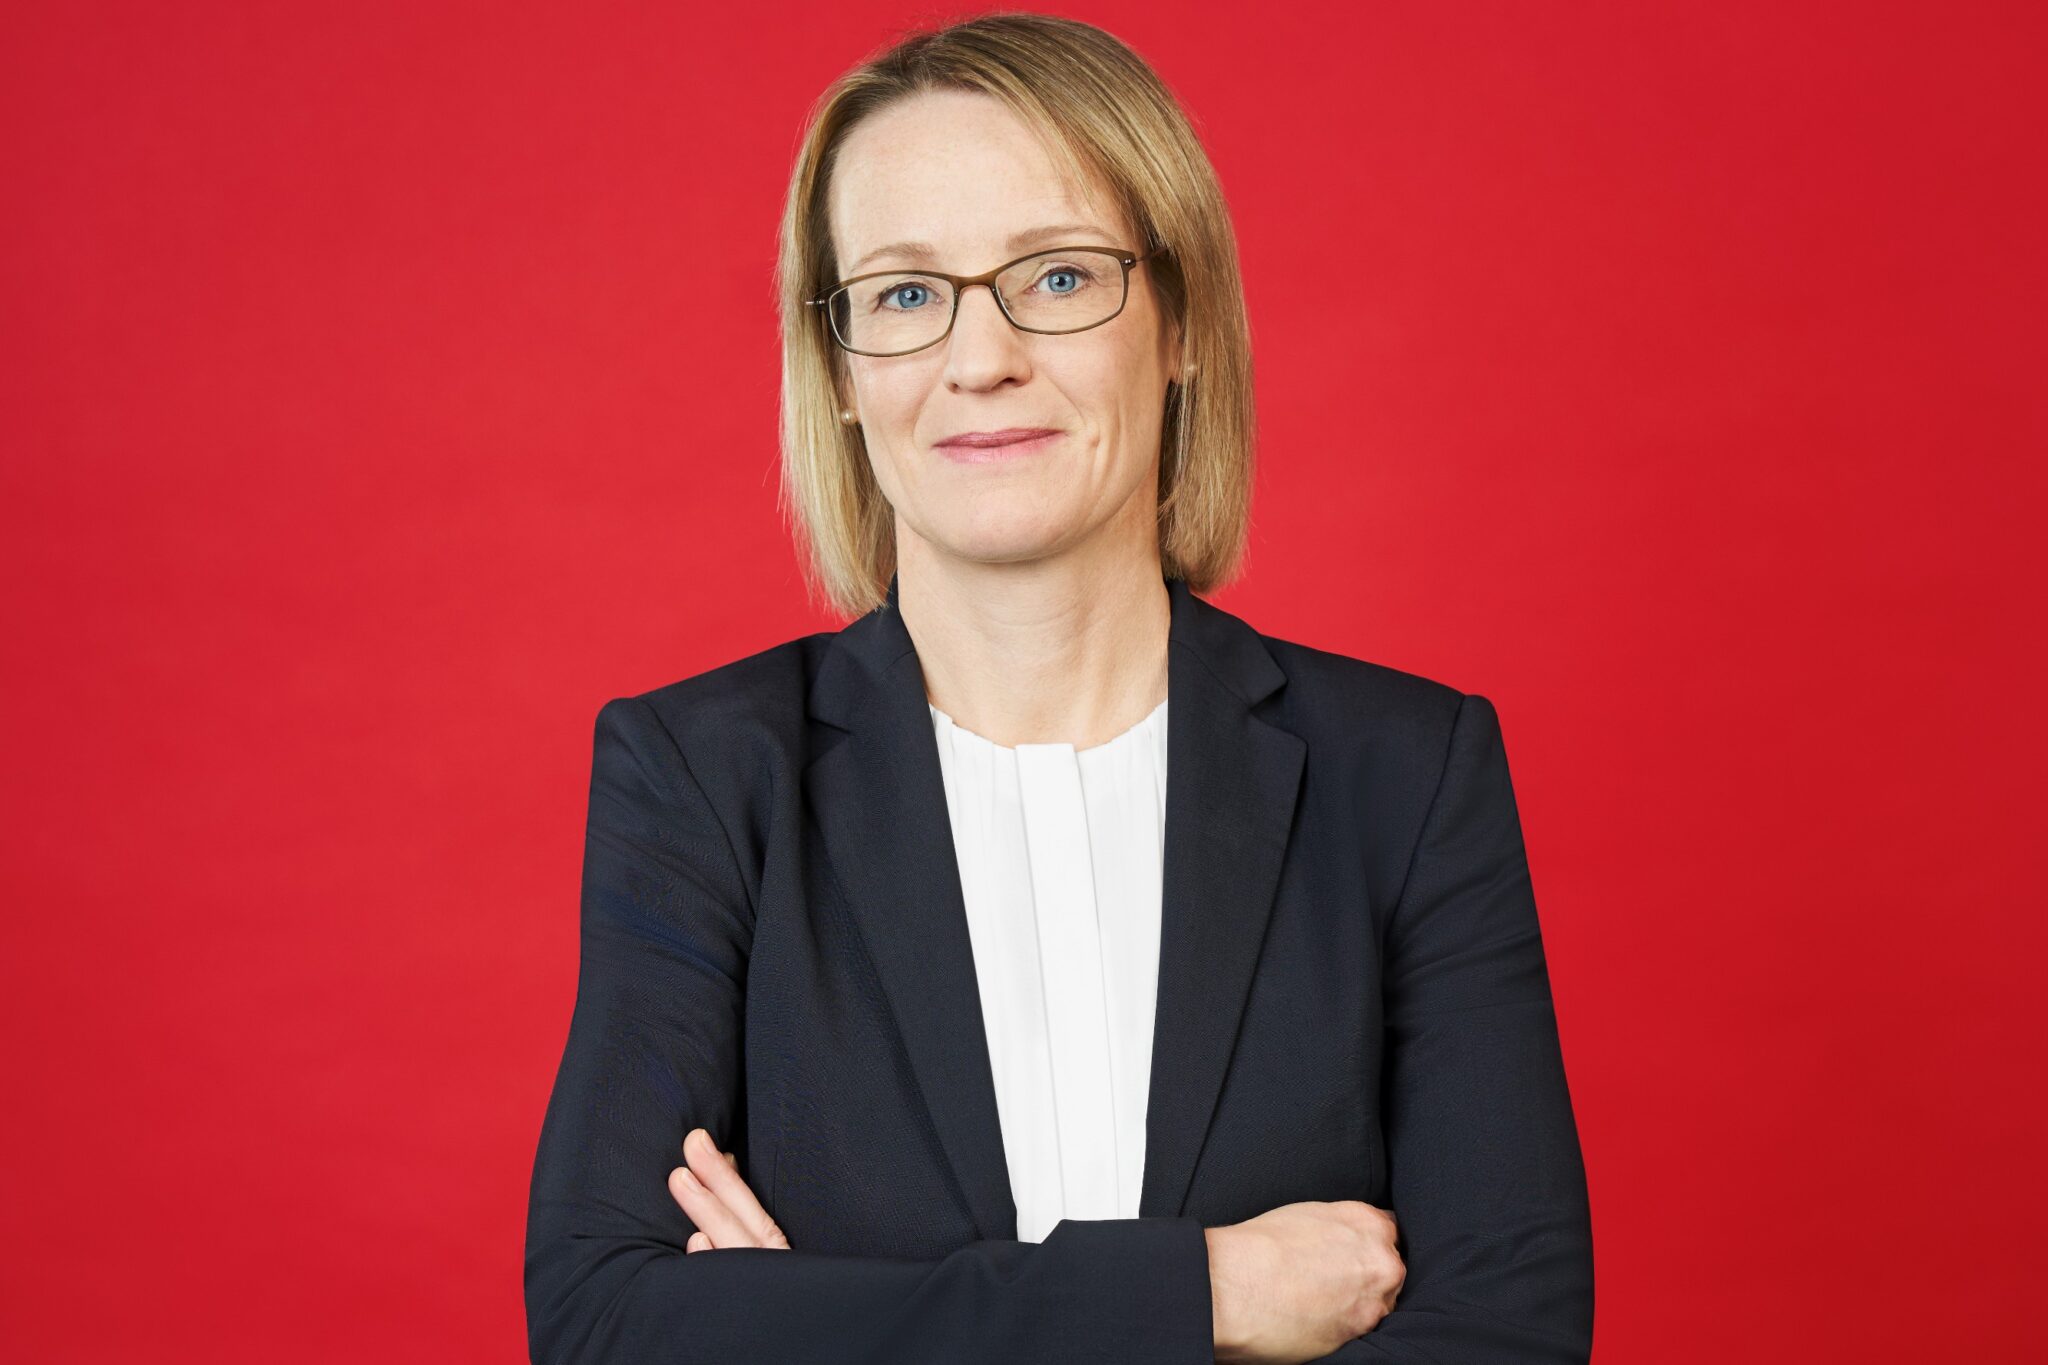 Melanie Kreis, DHL Group chief financial officer